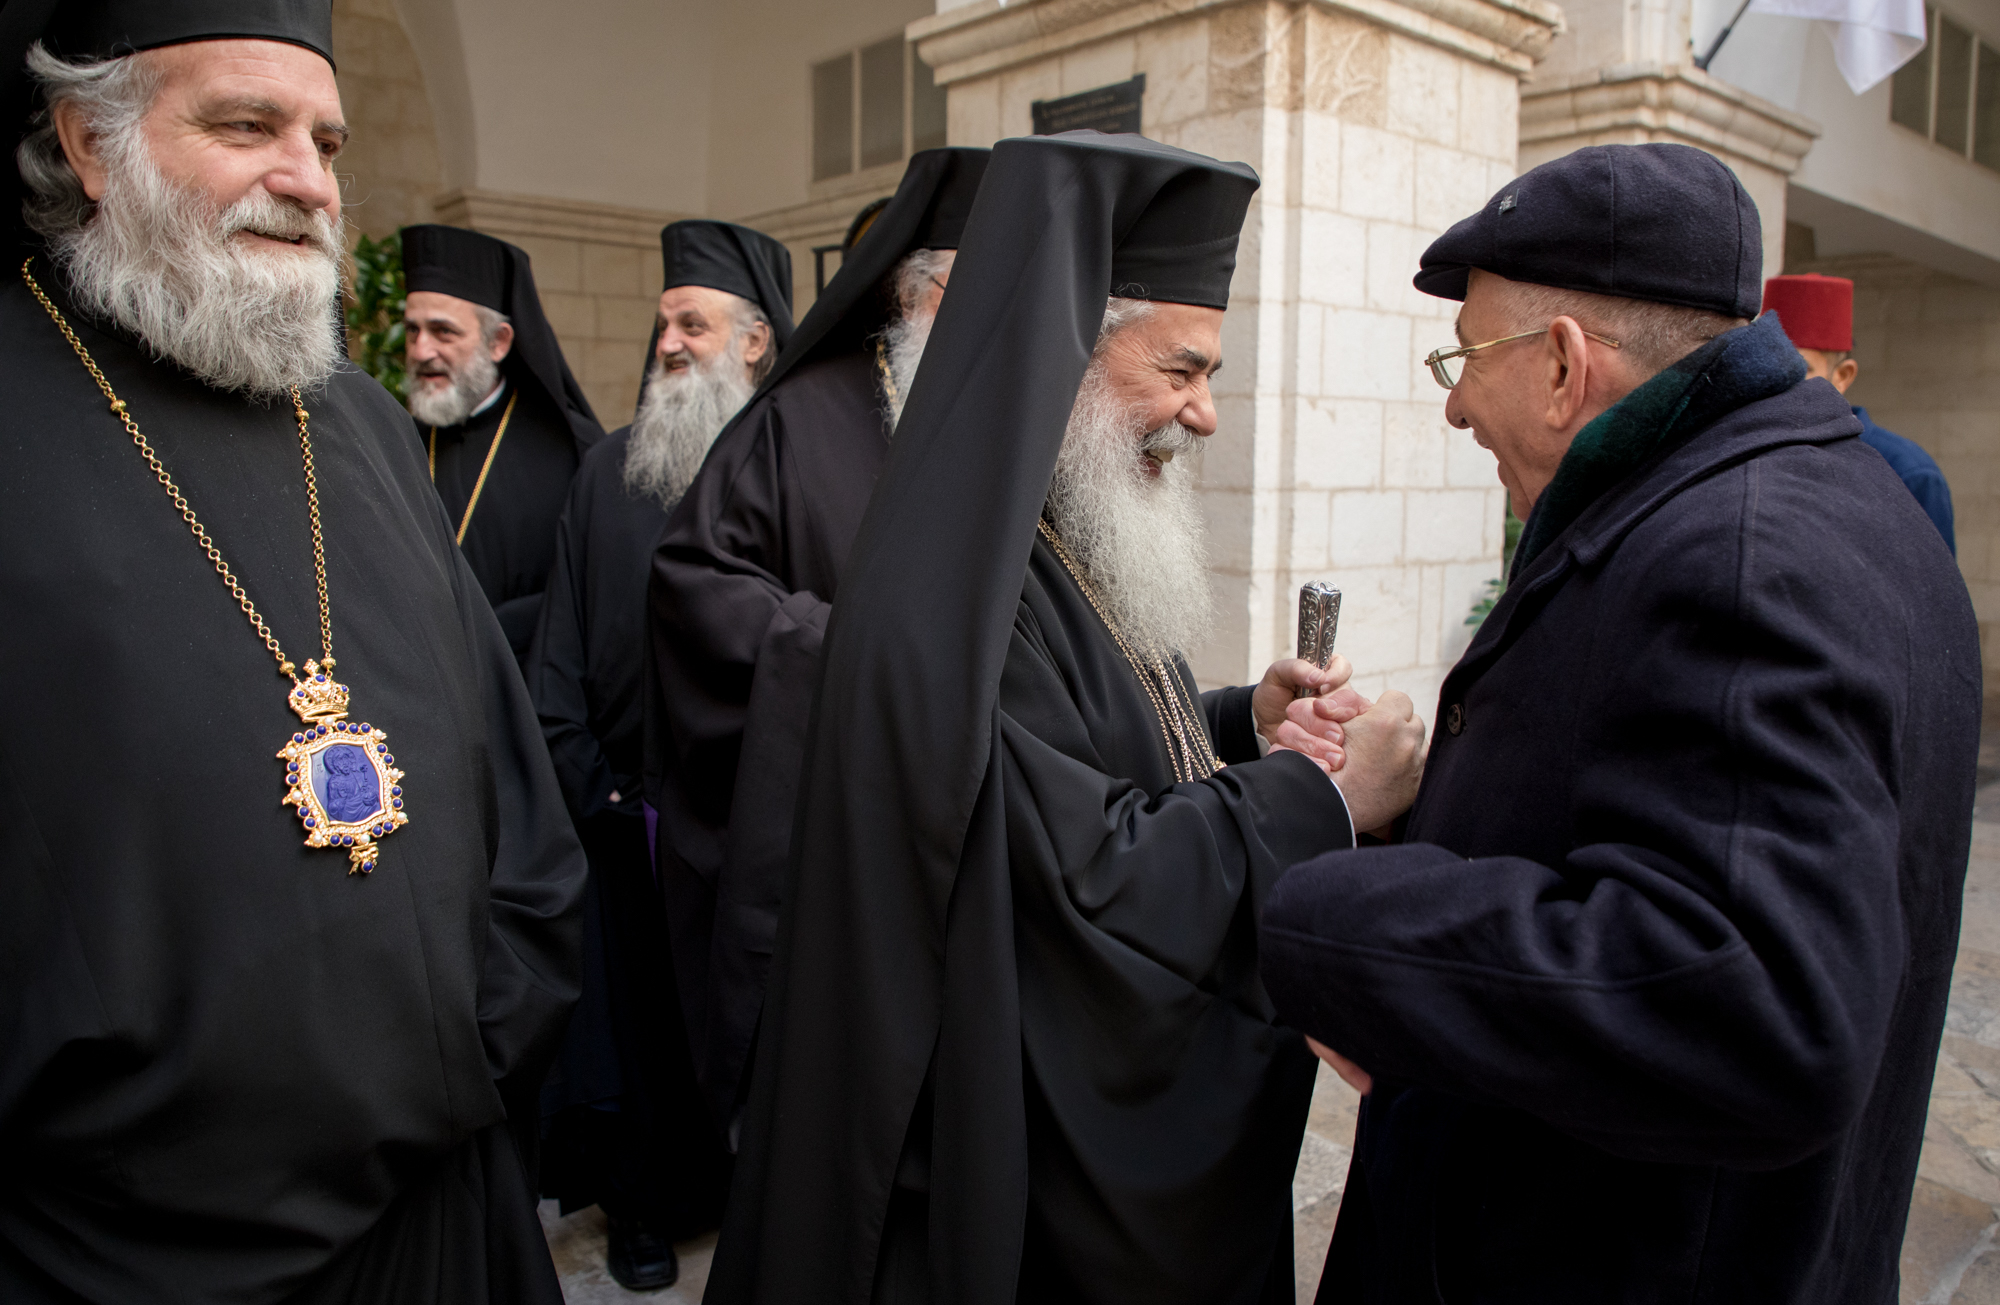 Bishop Dr. Munib Younan greets the Greek Orthodox elders during a Christmas visit.